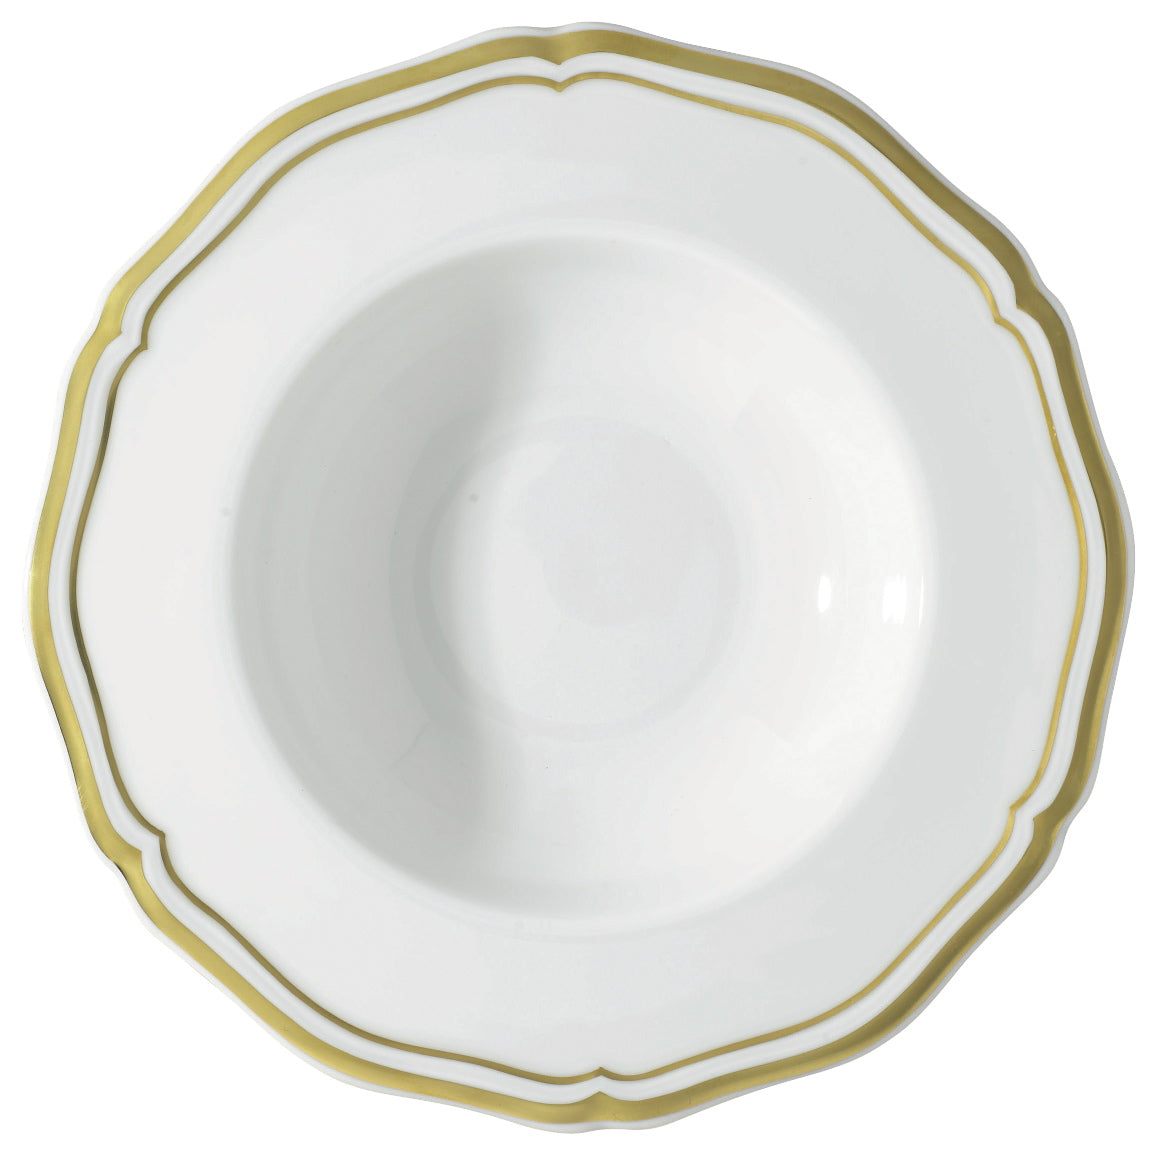 Polka Or - French Rim Soup Plate 9.1 in 6 oz